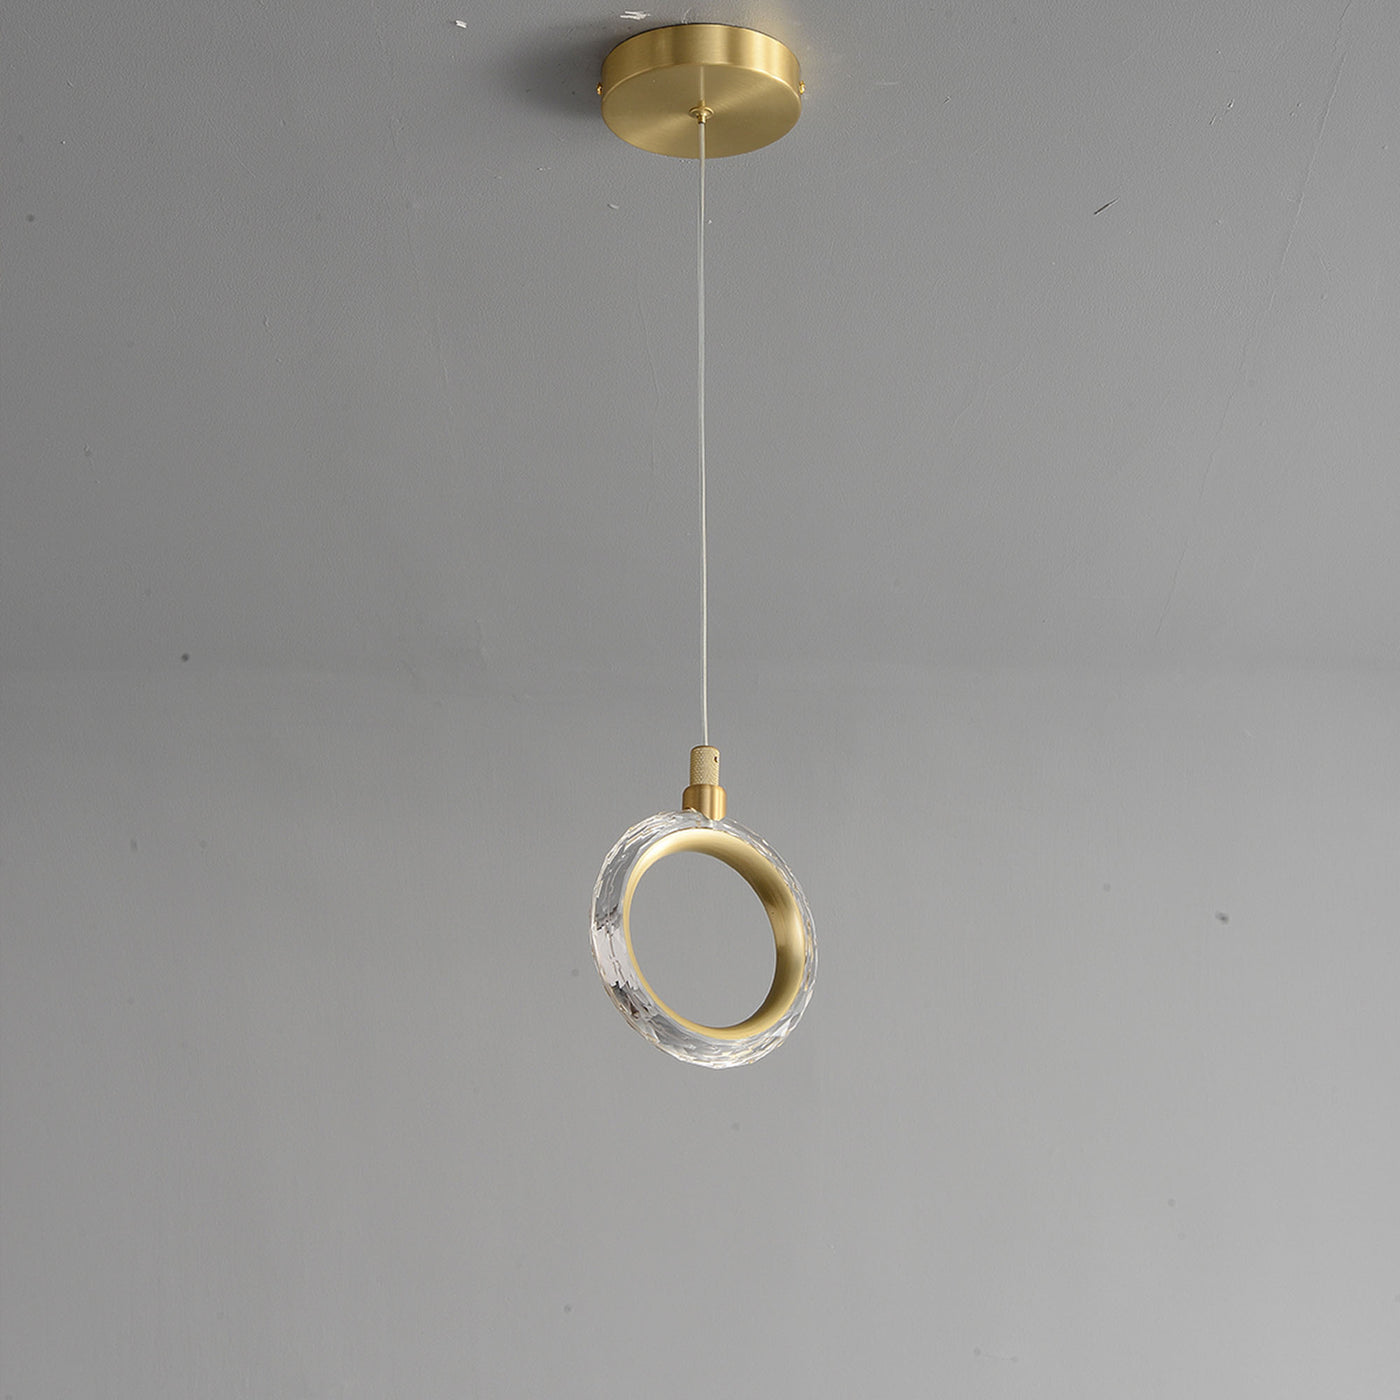 Creative ring chandelier